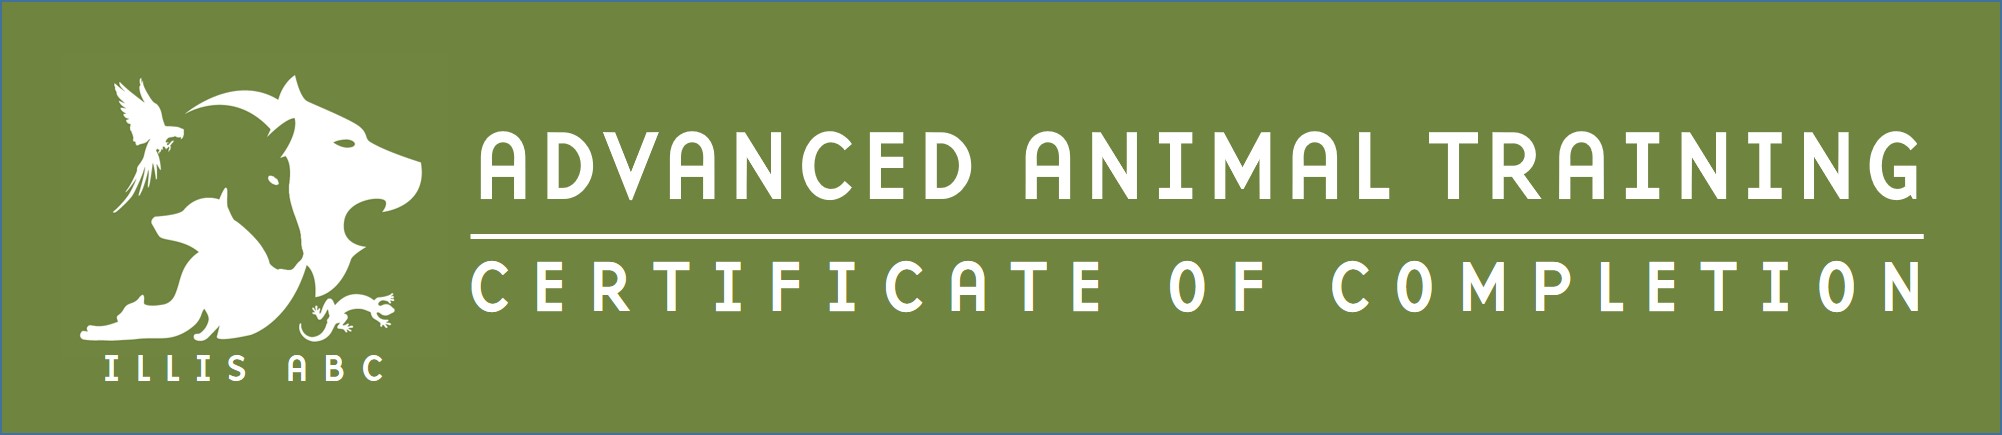 Advanced Animal Training